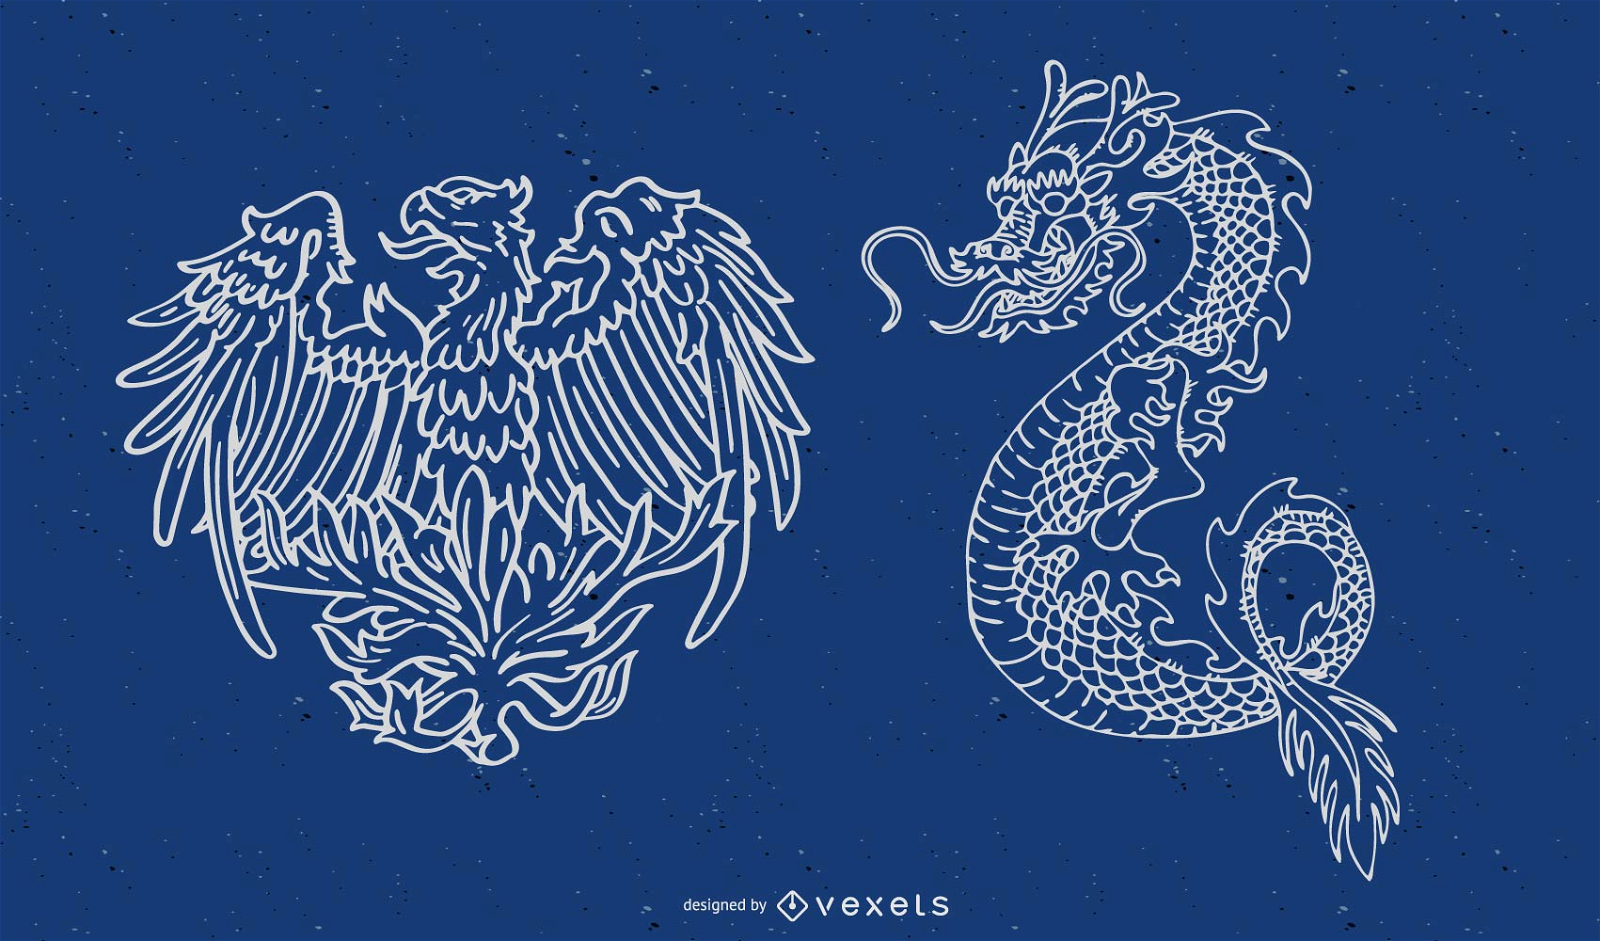 Illustrated dragon and phoenix design